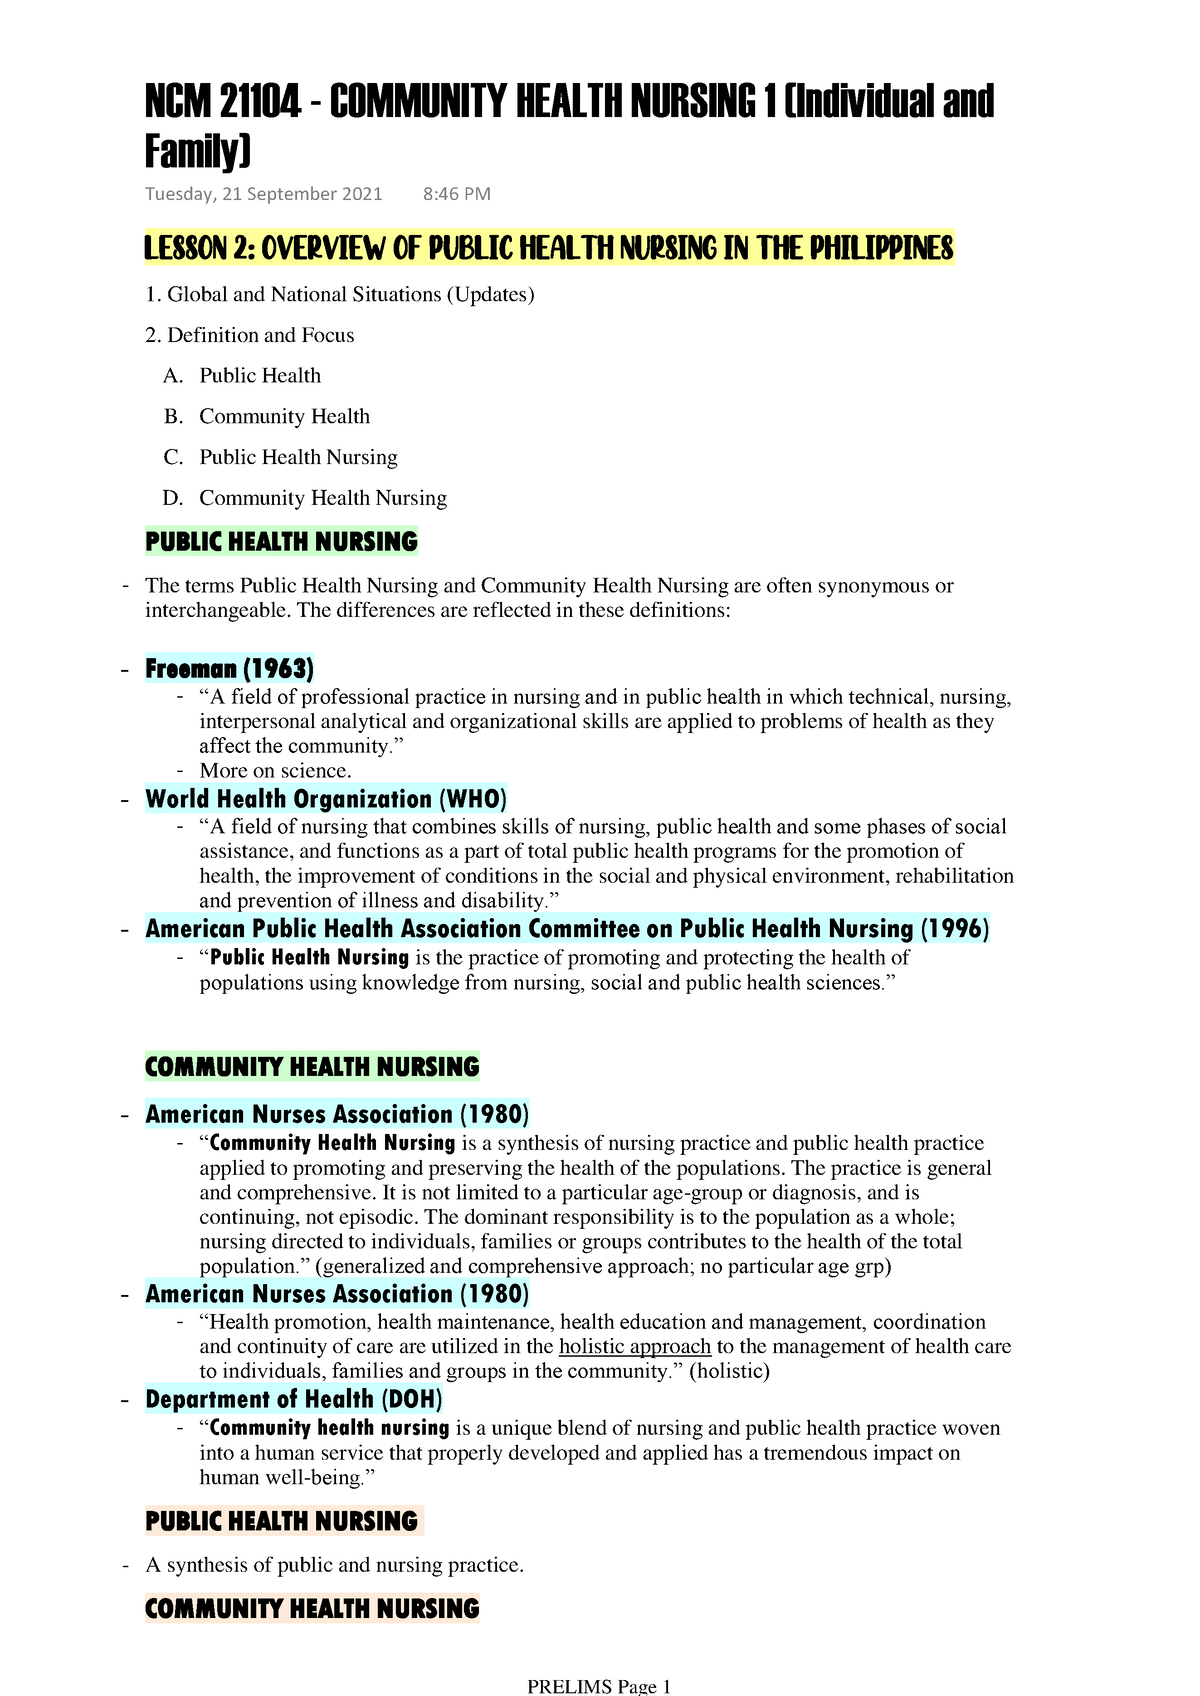 community health nursing research topics pdf